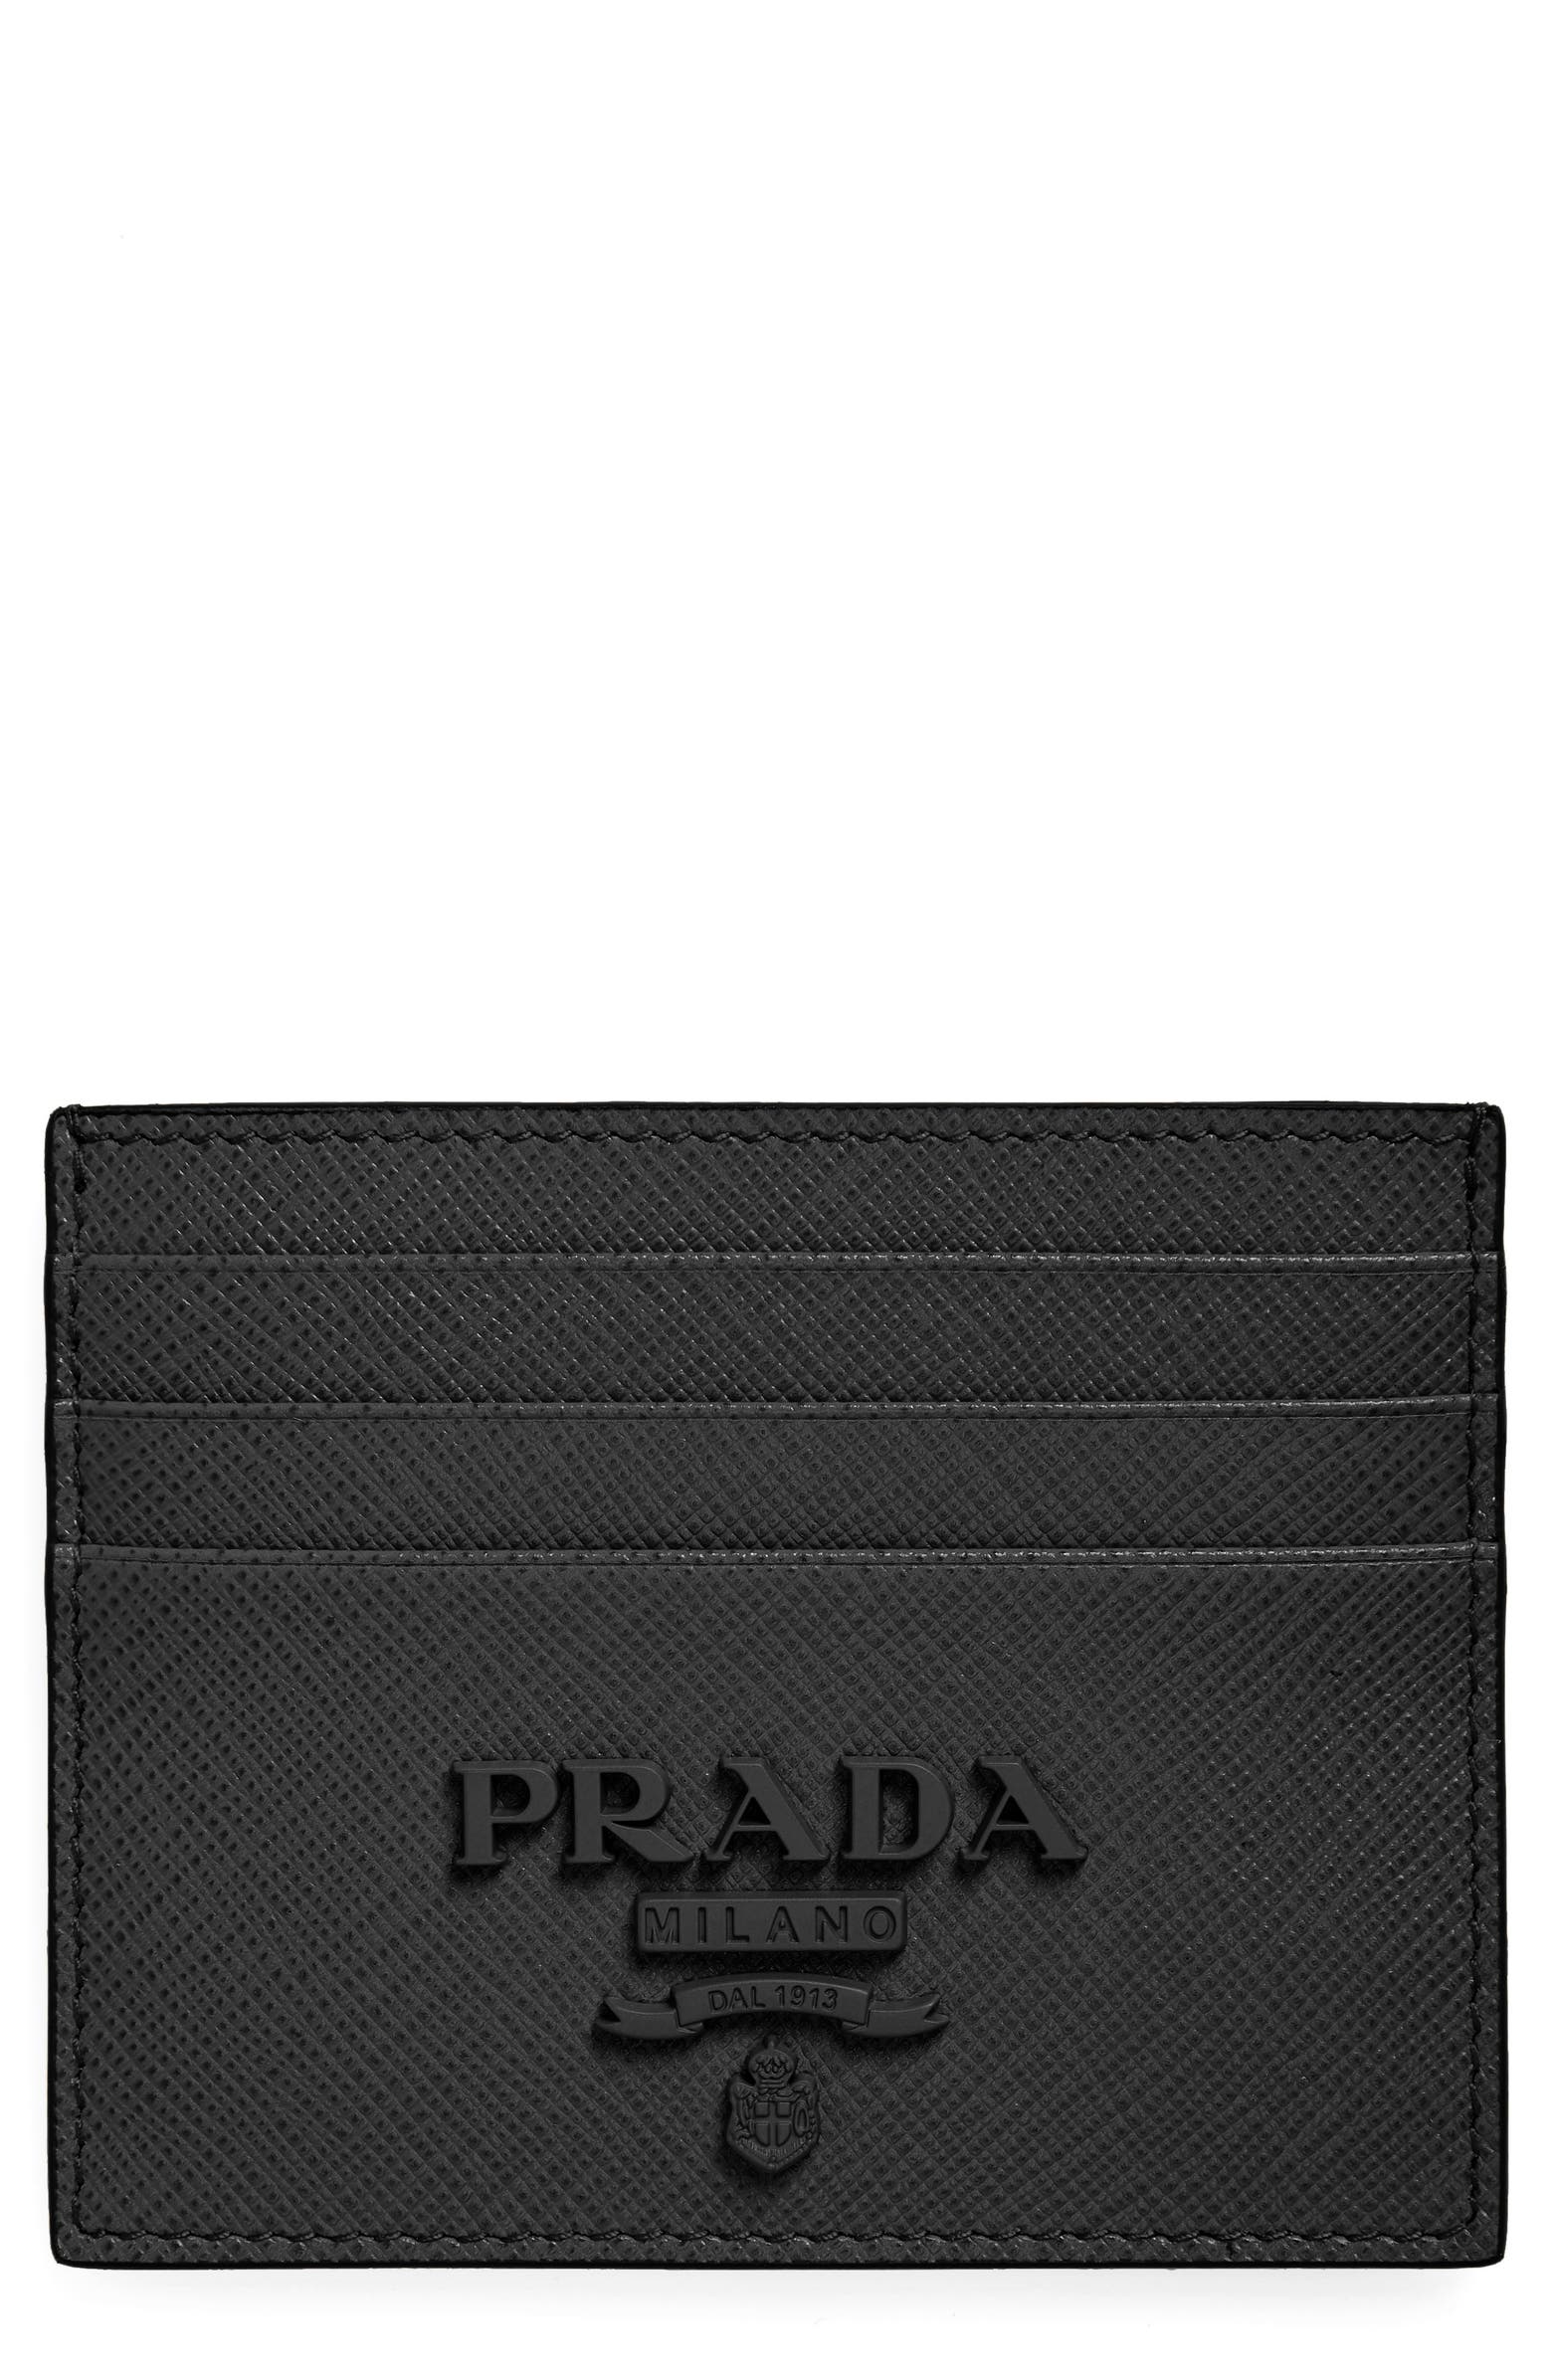 Prada Monogram Saffiano Leather Card Case | Nordstrom